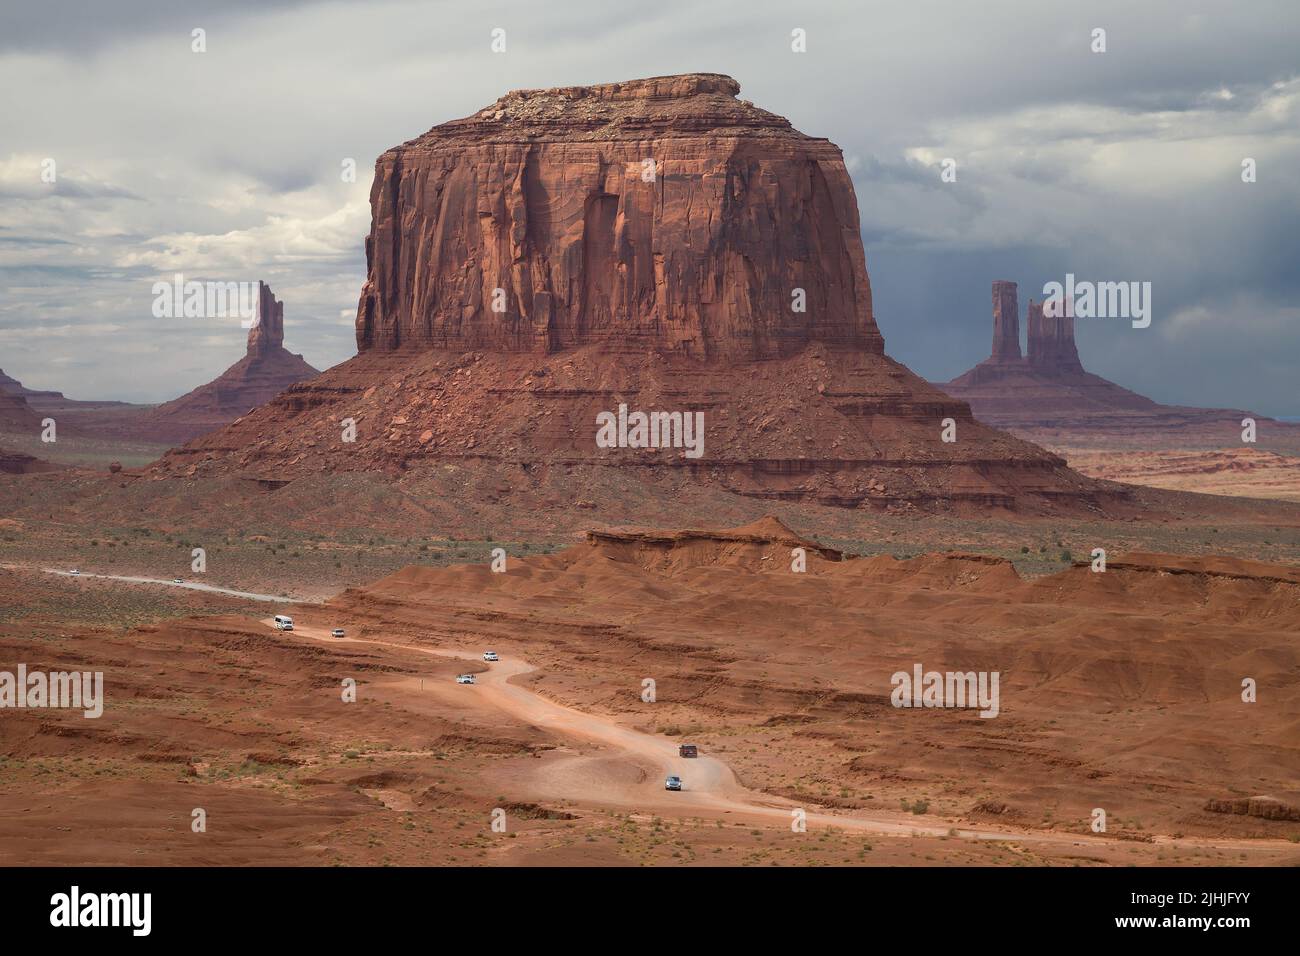 Monument Valley Scenic Drive, Arizona, United States. Stock Photo